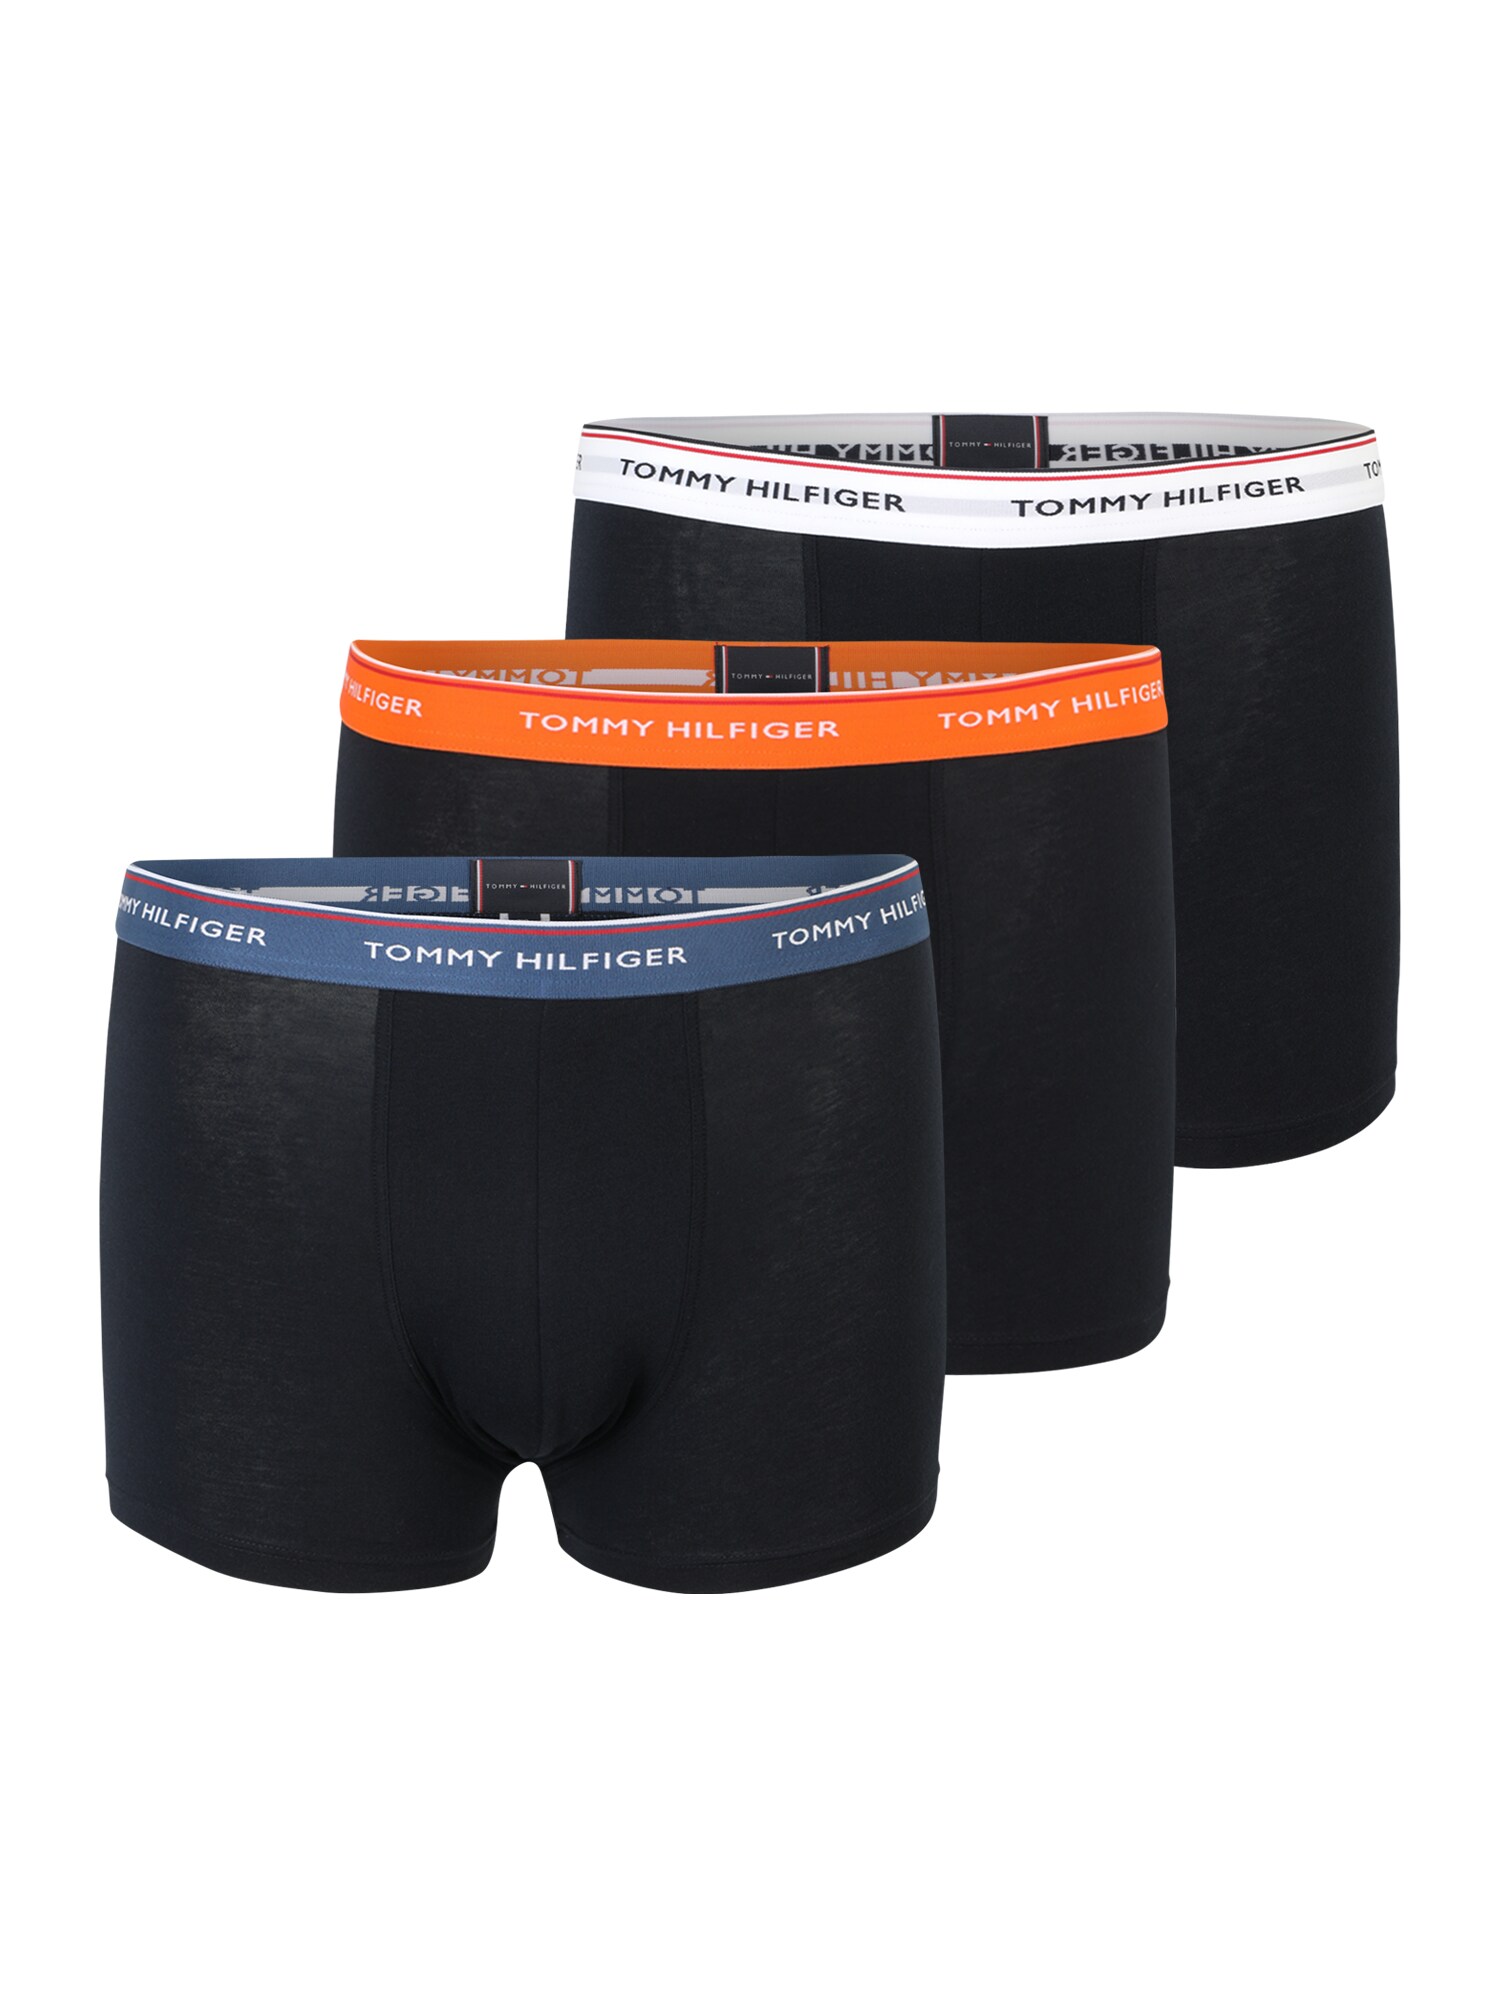 Tommy Hilfiger Underwear Plus Boxer trumpikės mišrios spalvos / juoda